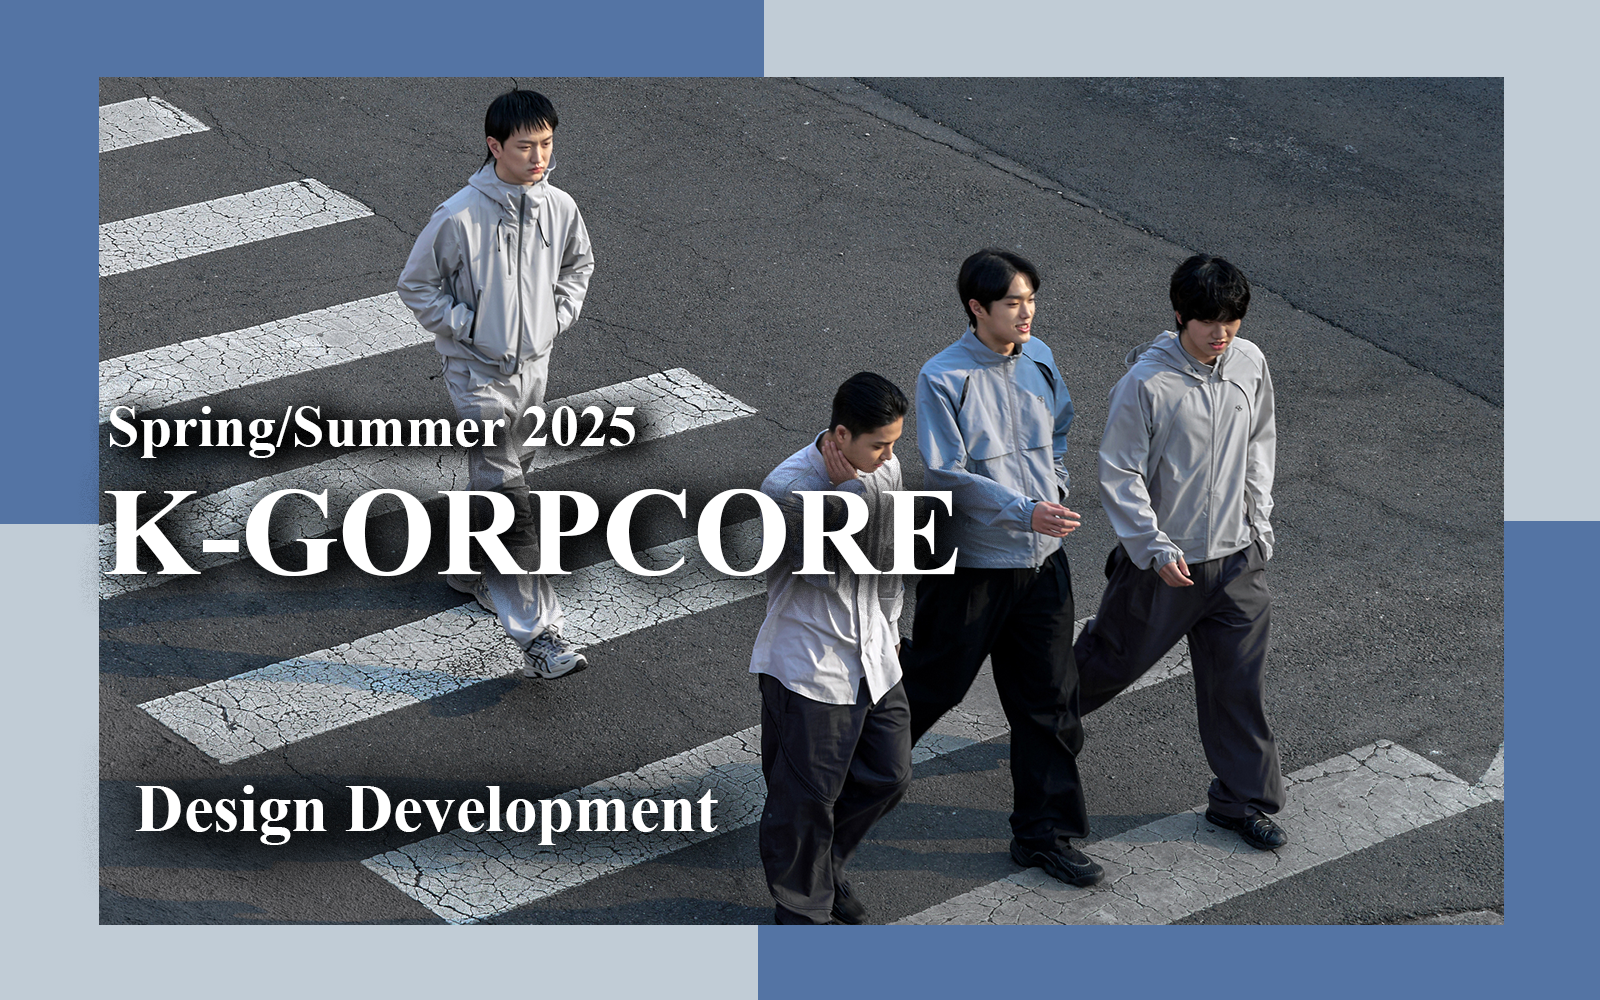 K-Gorpcore -- The Design Development of Korean-style Outdoorwear